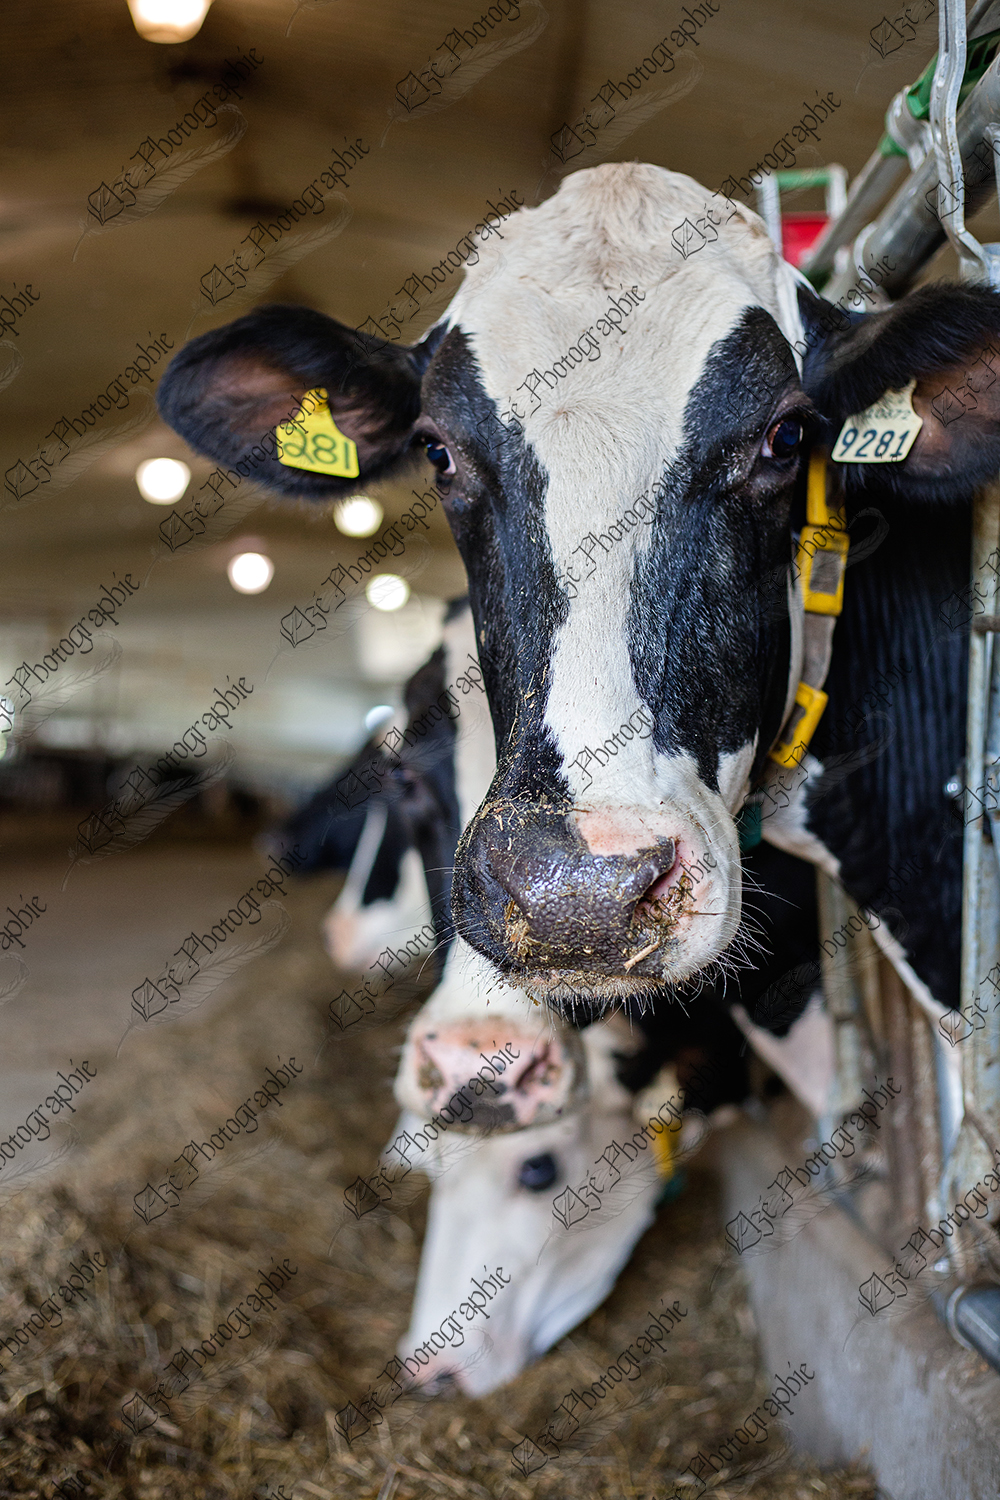 elze_photo_8599_regard_animal_ferme_dairy_cow